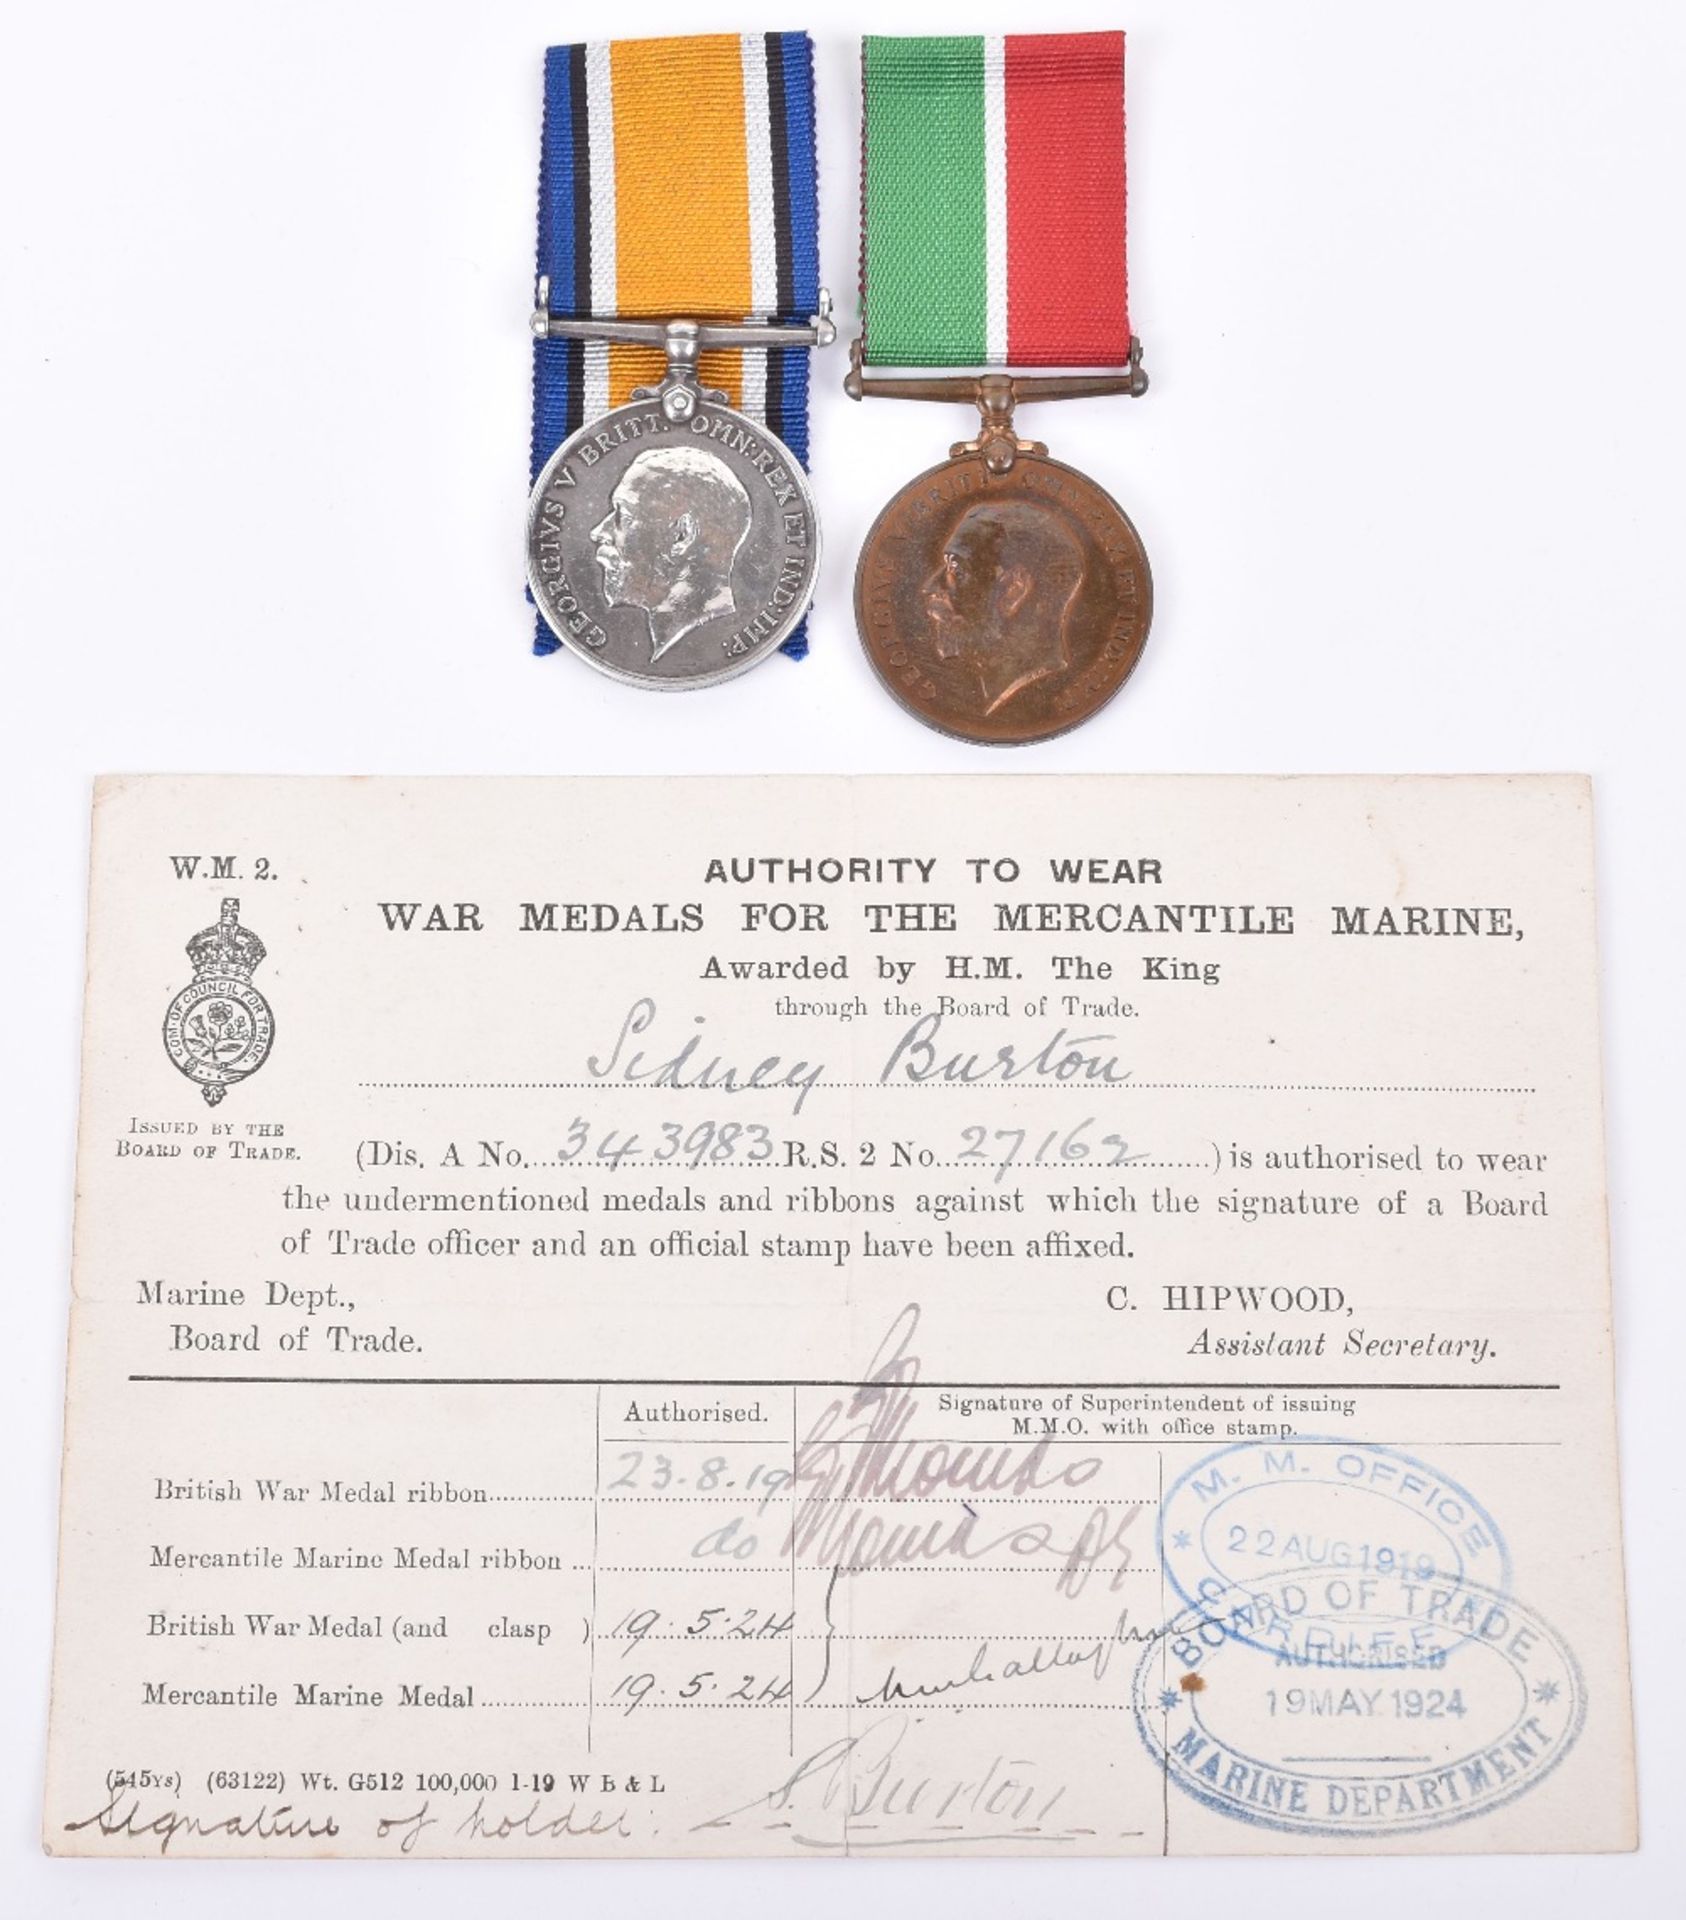 WW1 Mercantile Marine Medal Pair to Master of the Merchant Ship “Prosper”